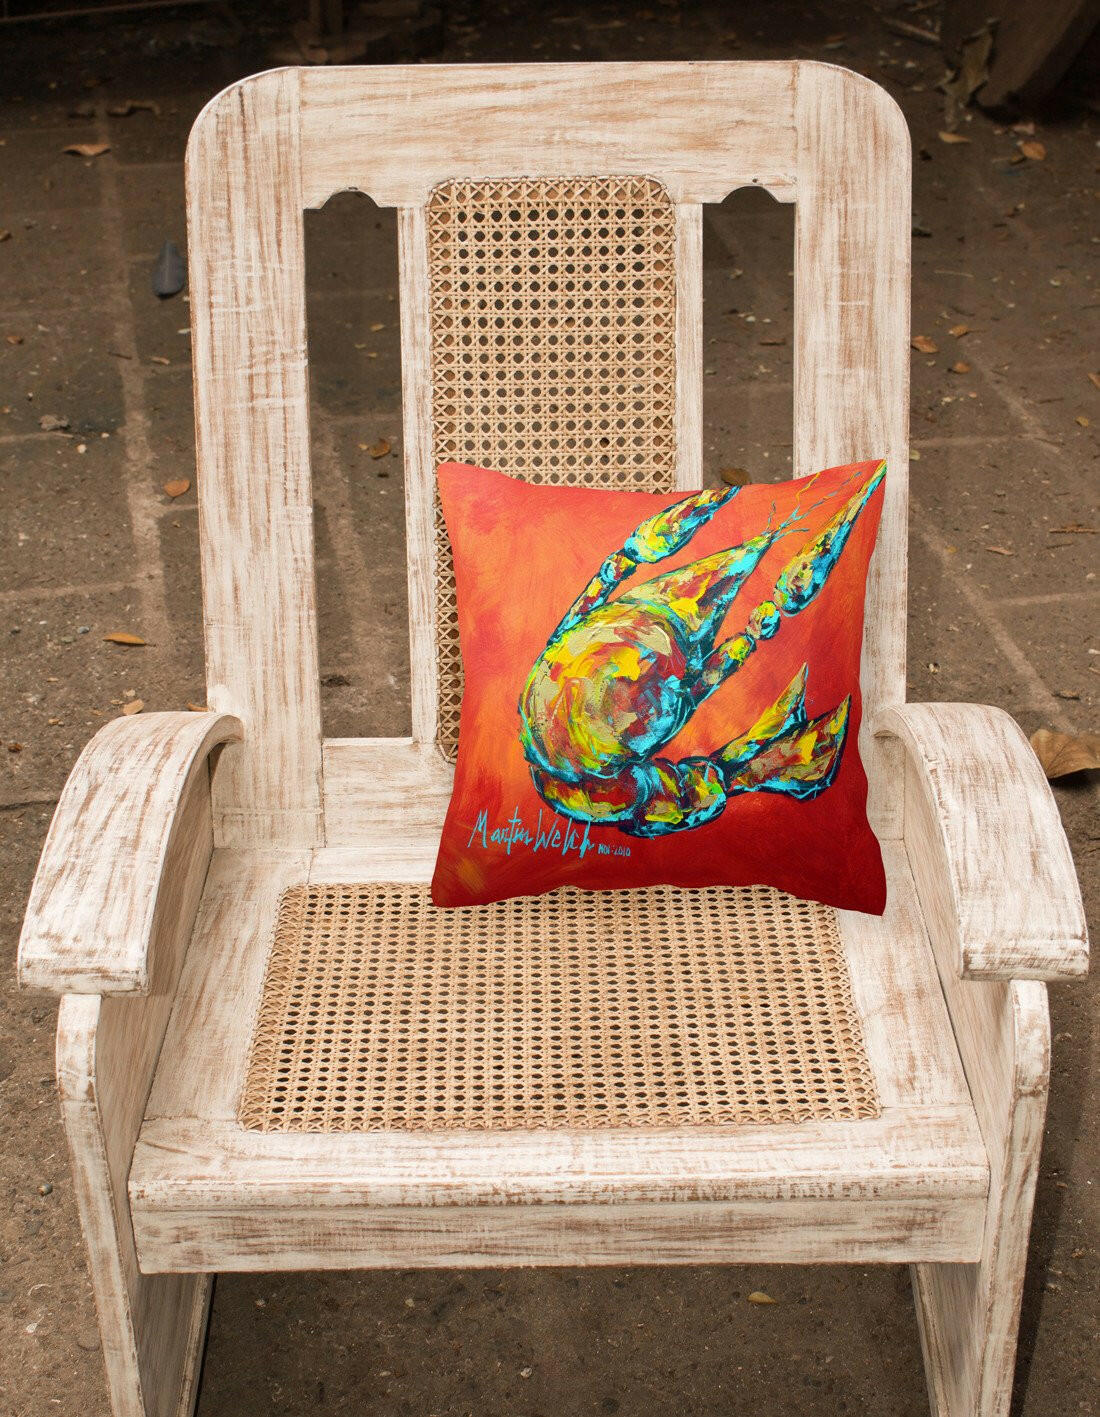 Crawfish Spicy Craw  Canvas Fabric Decorative Pillow MW1131PW1414 by Caroline's Treasures